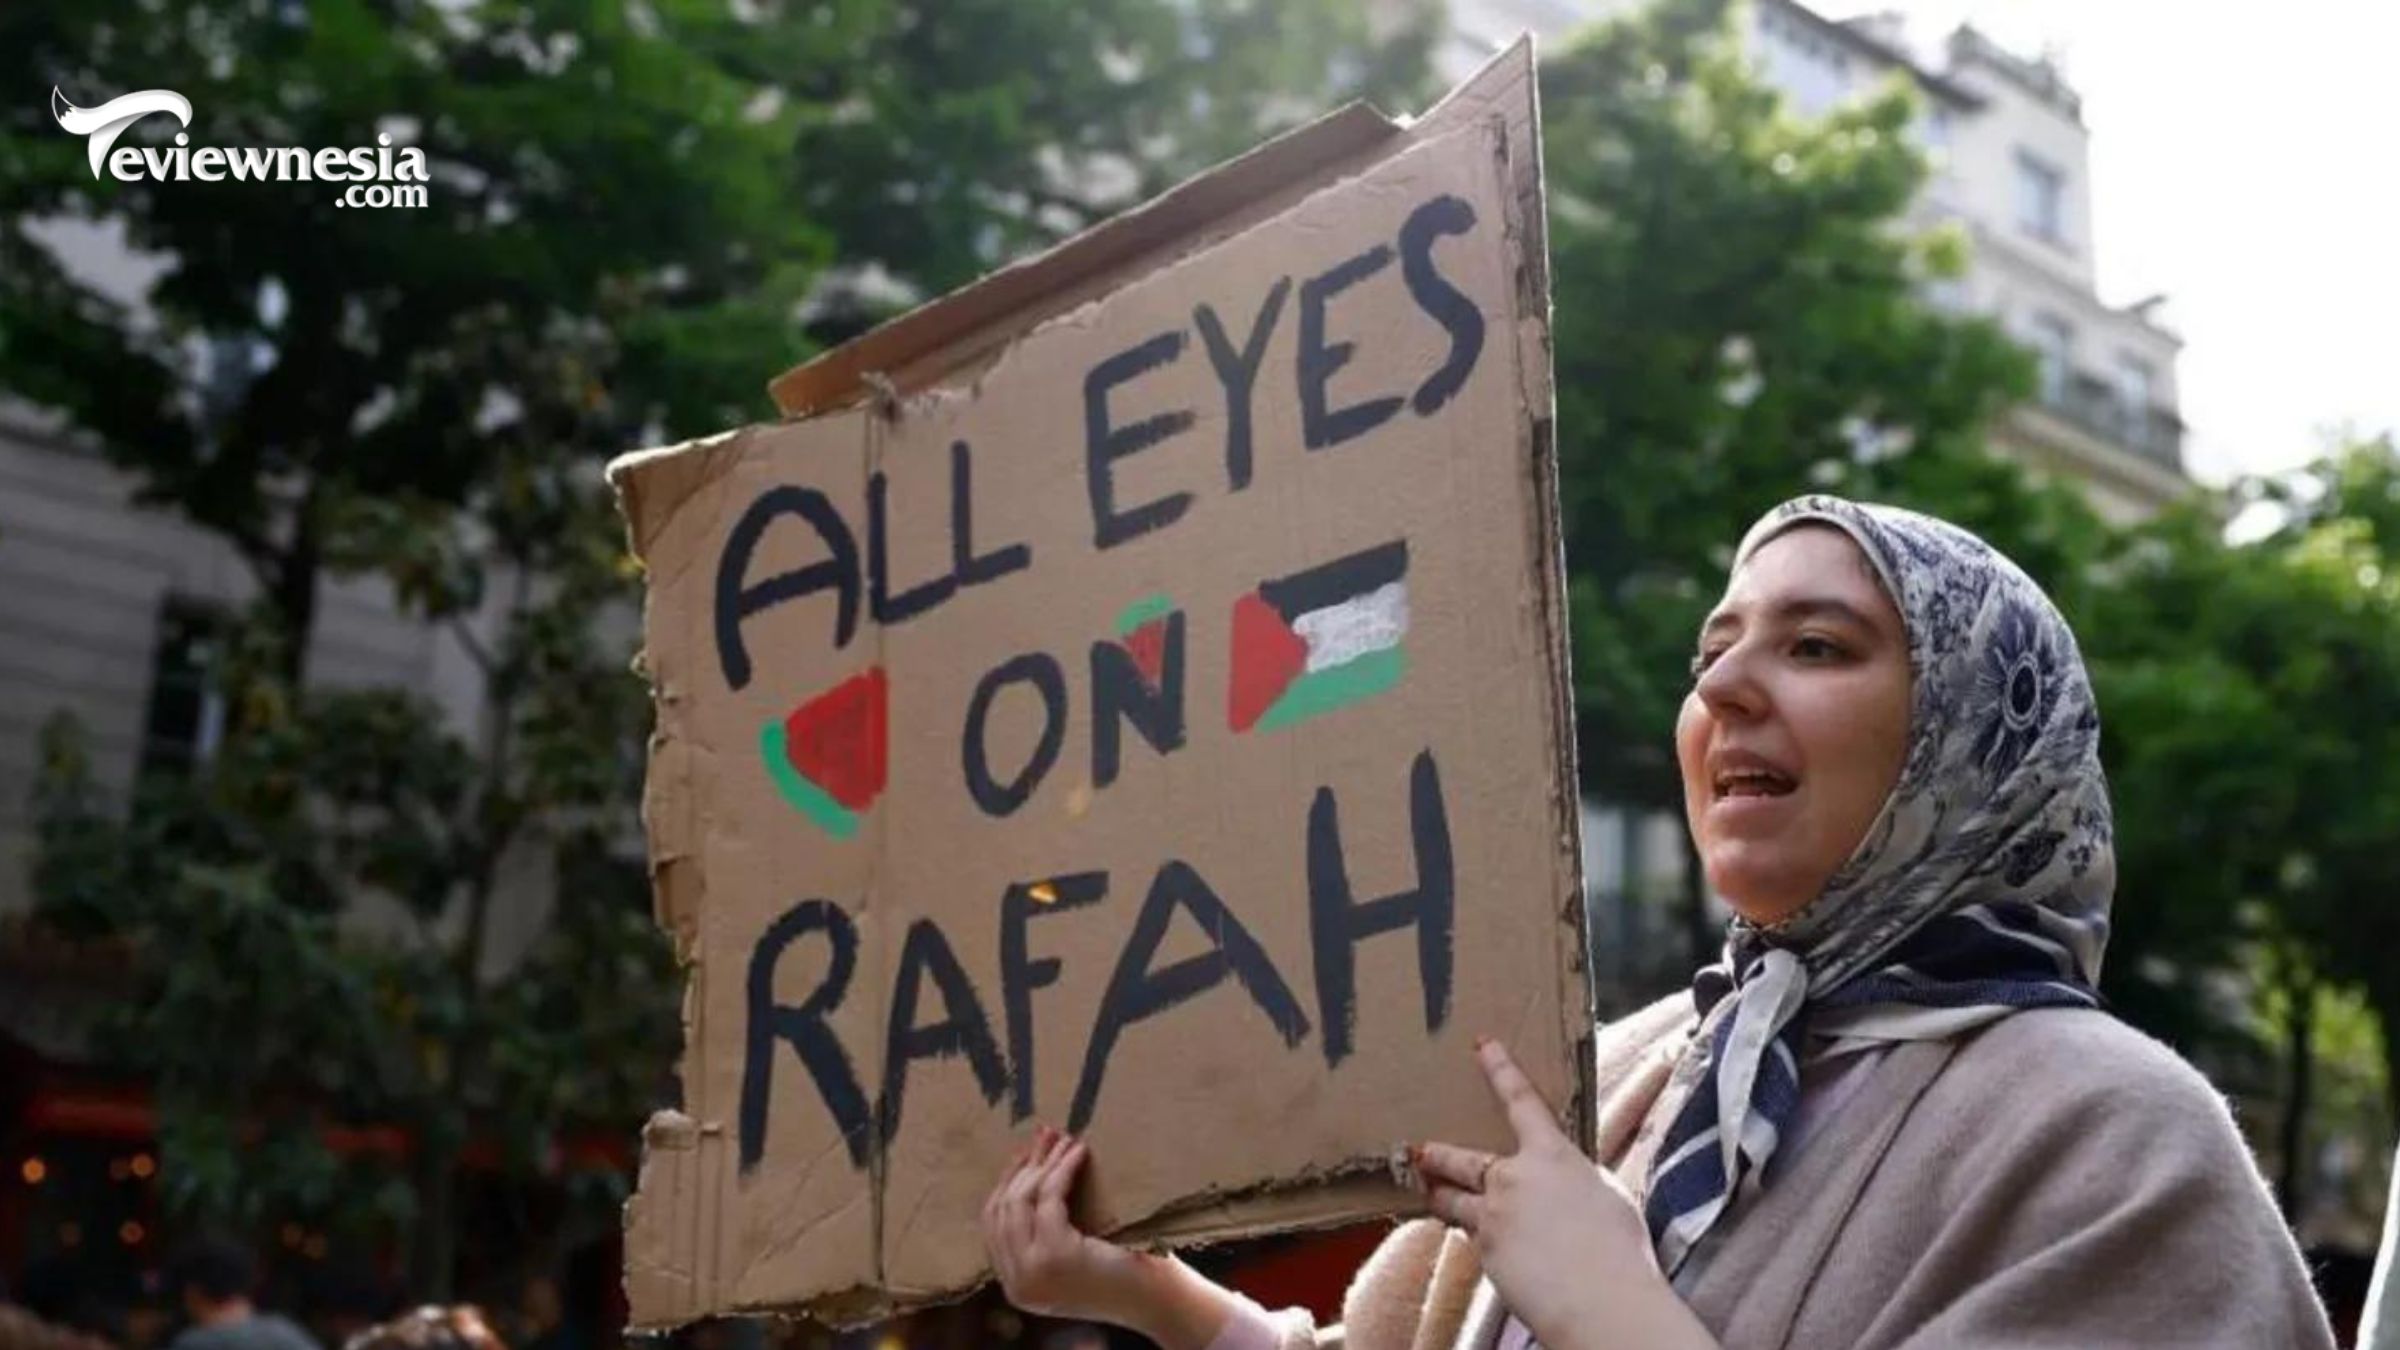 All Eyes on Rafah, Dukungan Bagi Perdamaian Dunia dan Kemerdekaan Palestina